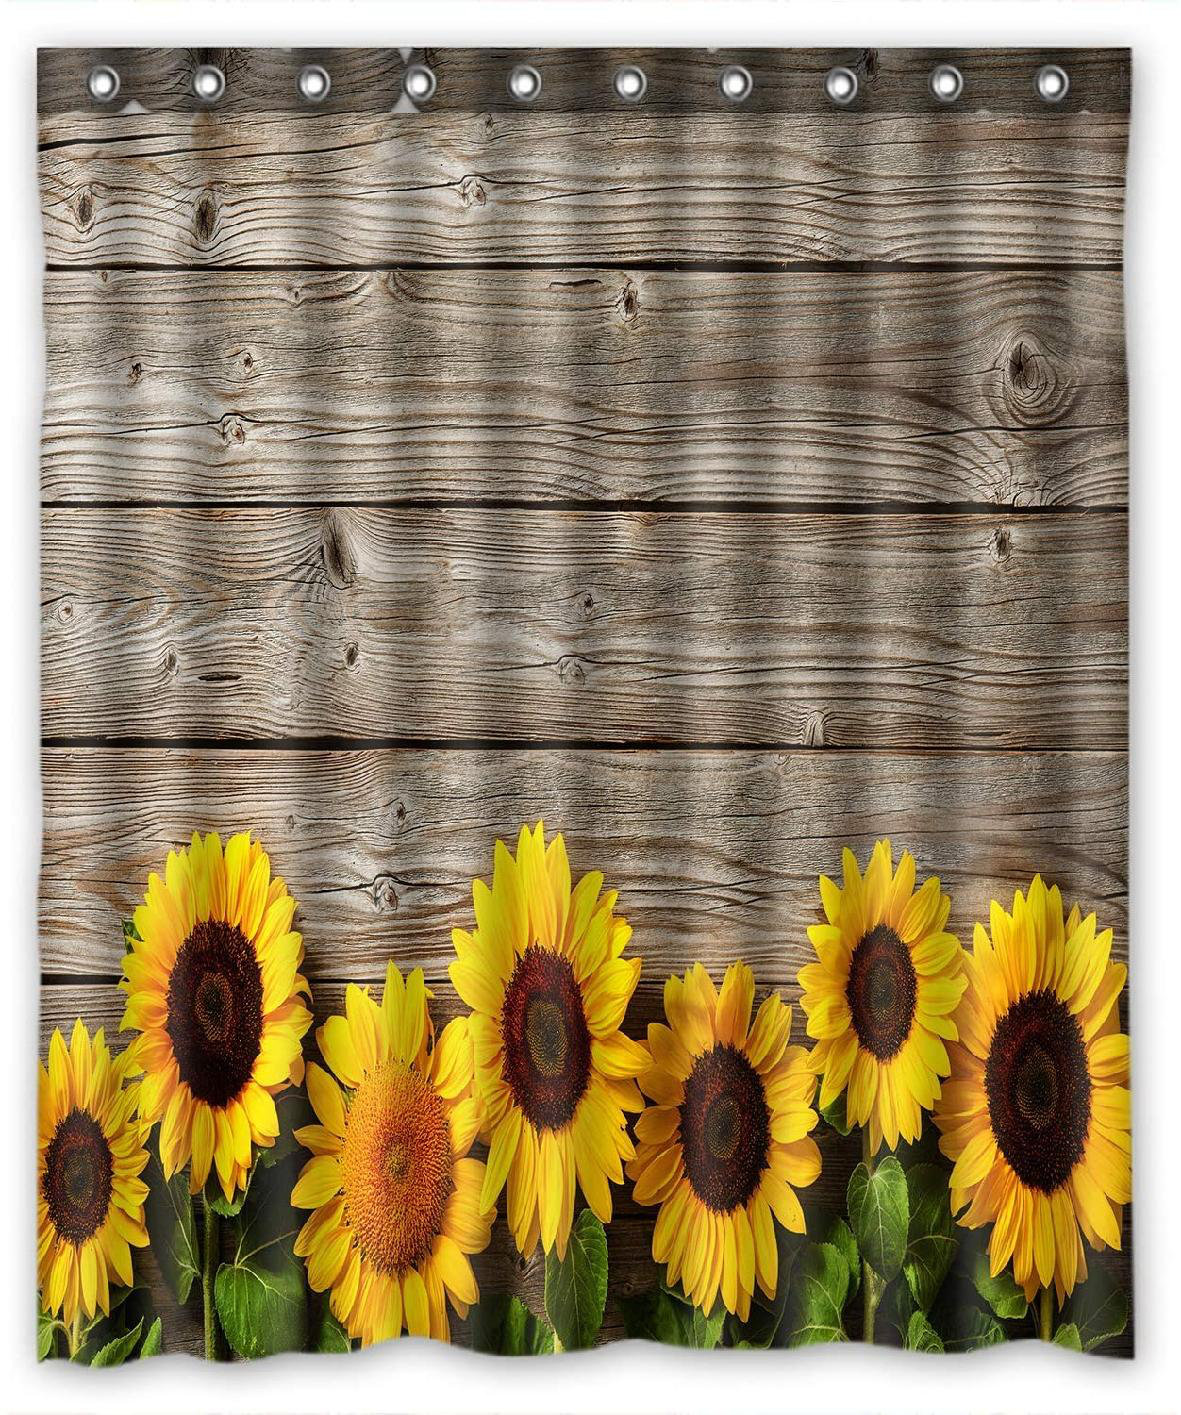 Rustic Wood Board Sunflowers Waterproof Fabric Shower Curtain Set Bathroom Liner 